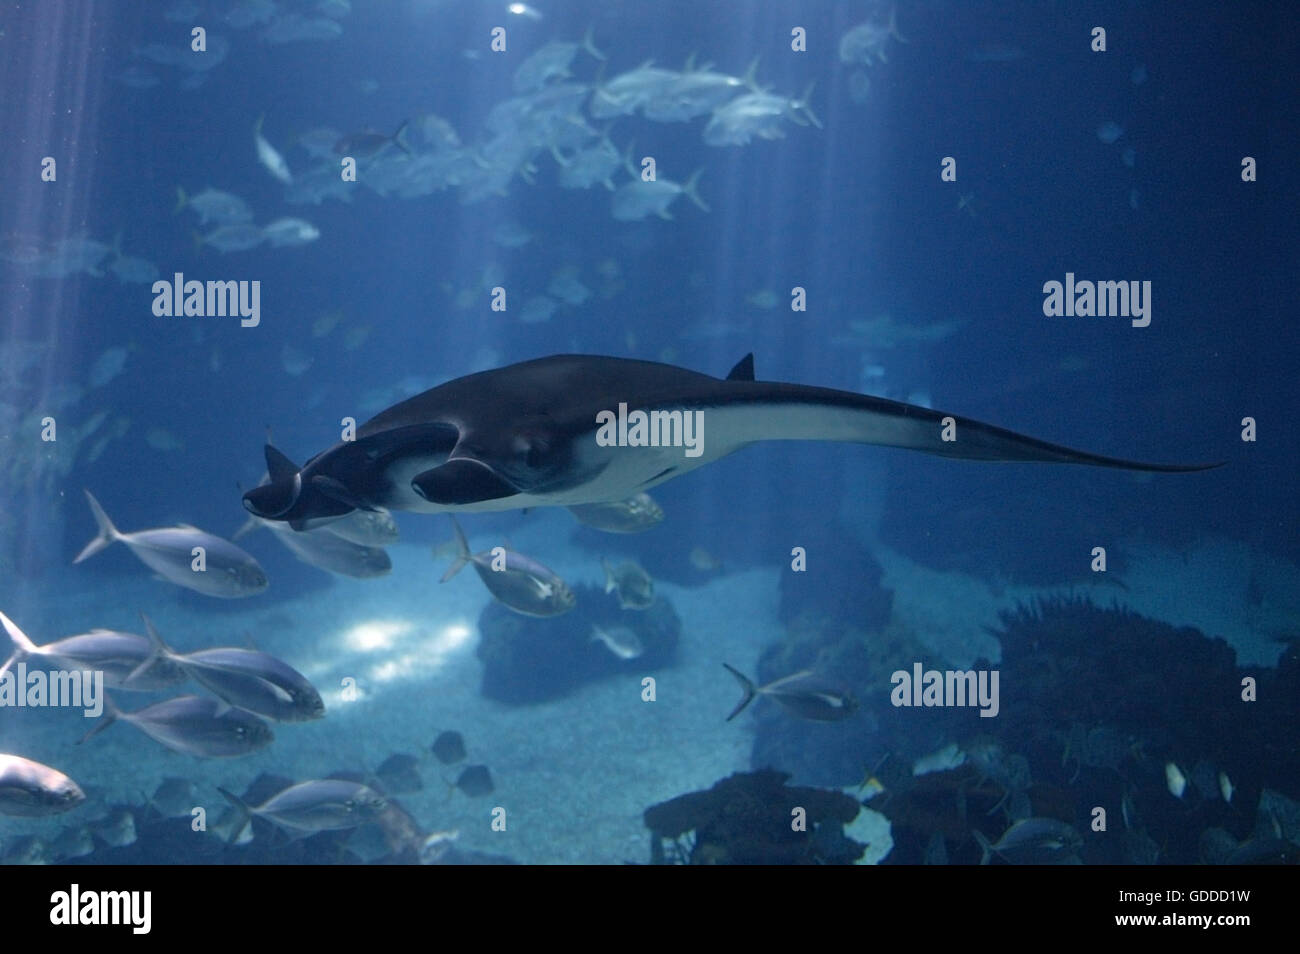 Manta ray australia hi-res stock photography and images - Alamy